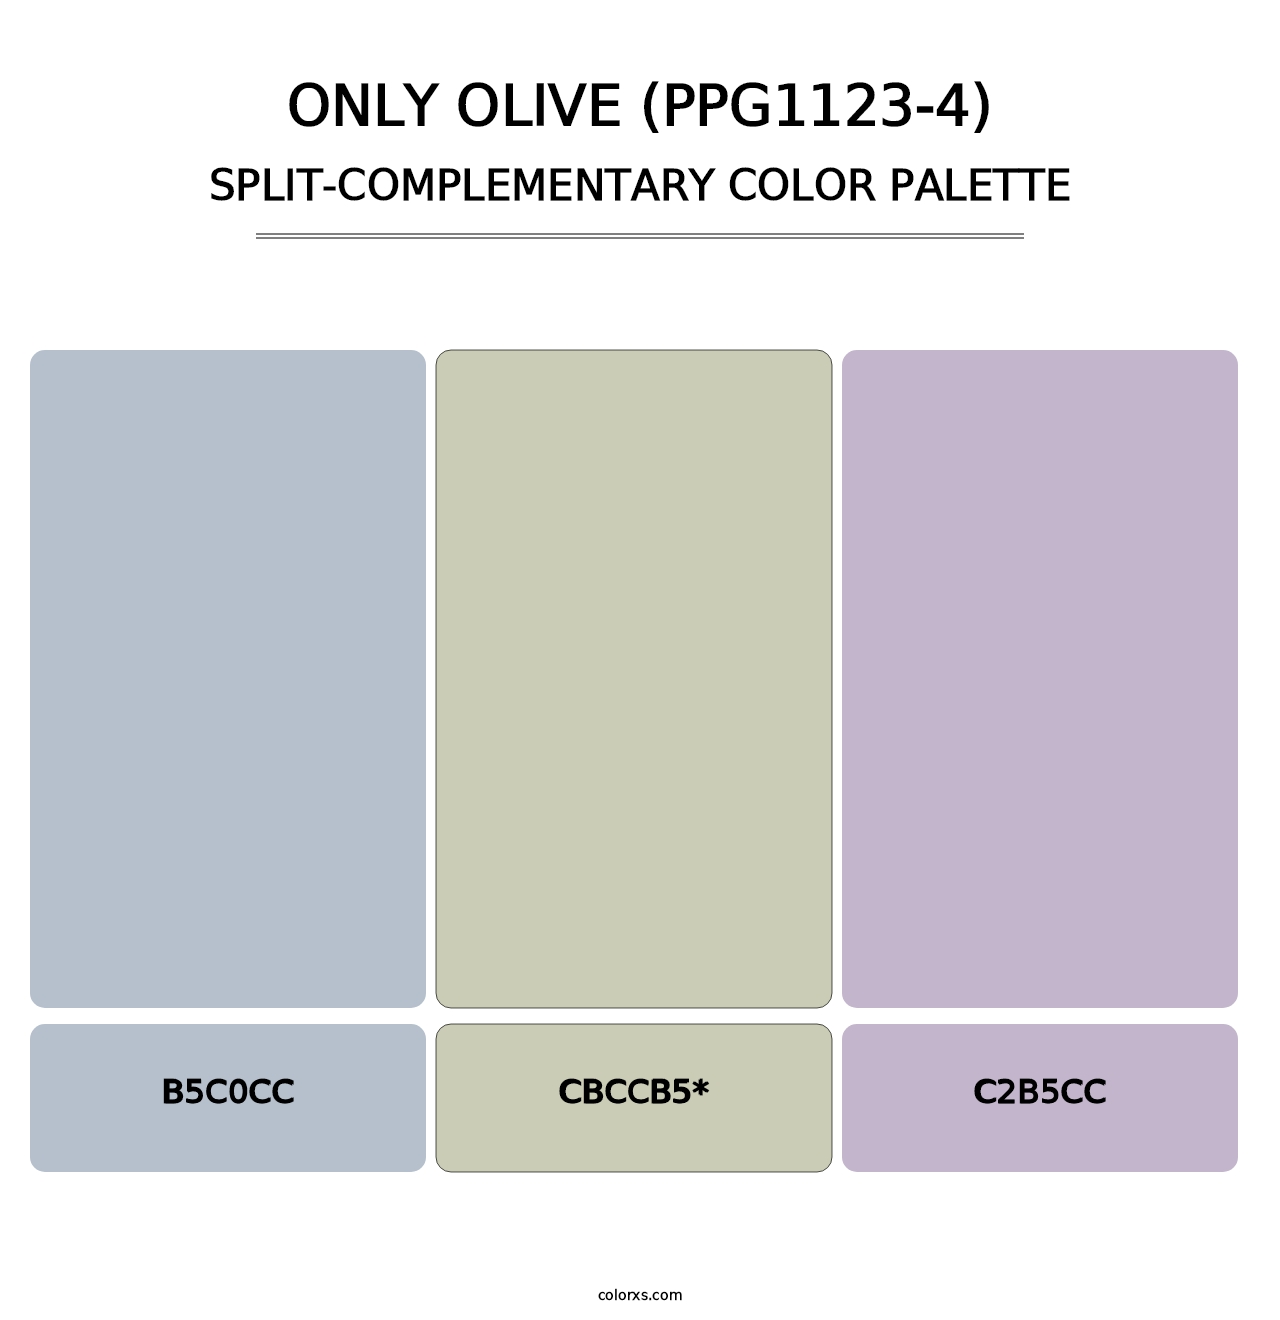 Only Olive (PPG1123-4) - Split-Complementary Color Palette